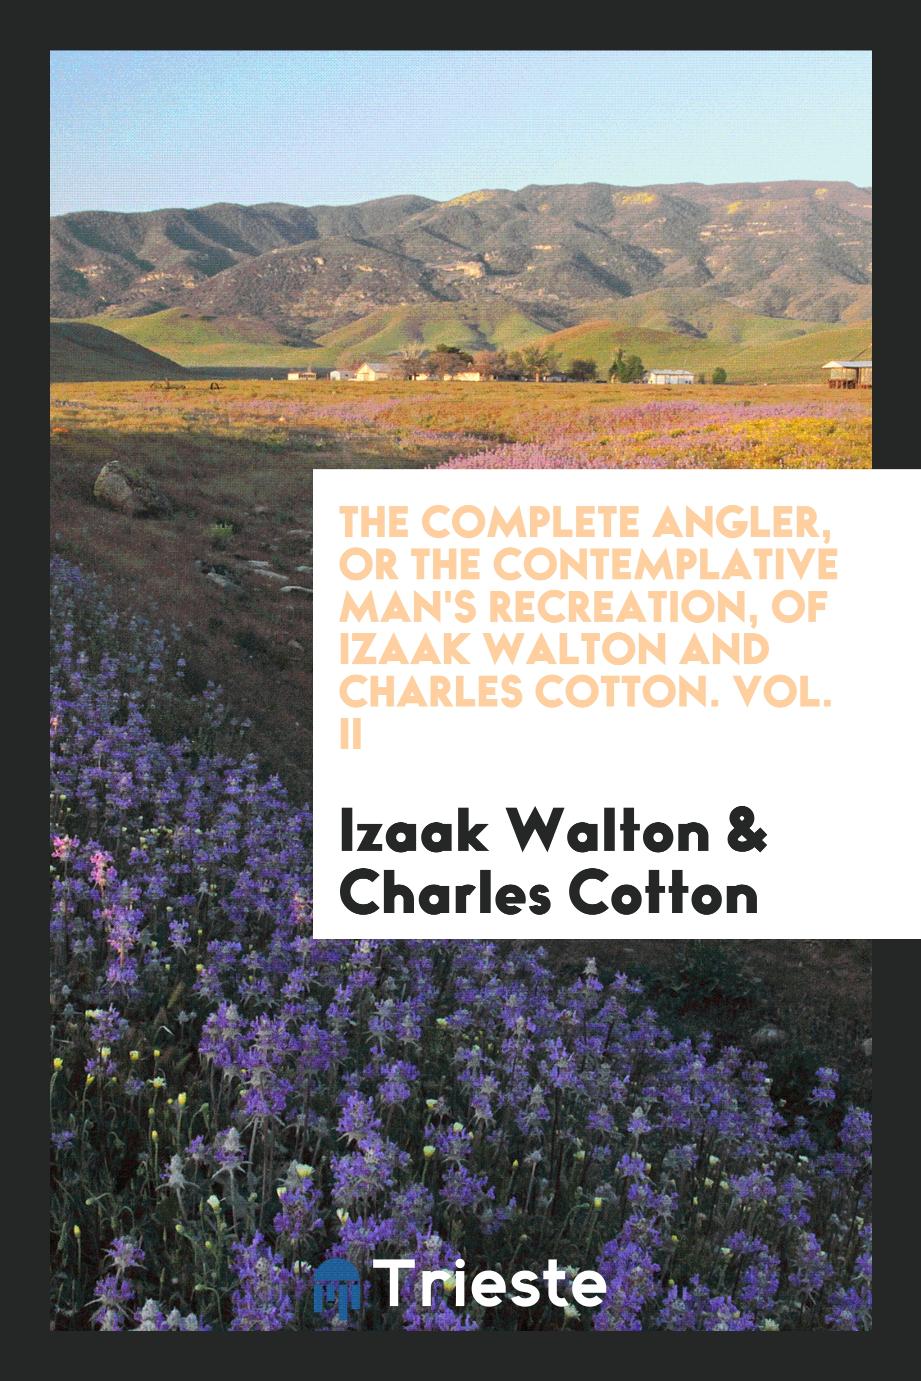 Izaak Walton, Charles Cotton - The Complete Angler, or The Contemplative Man's Recreation, of Izaak Walton and Charles Cotton. Vol. II